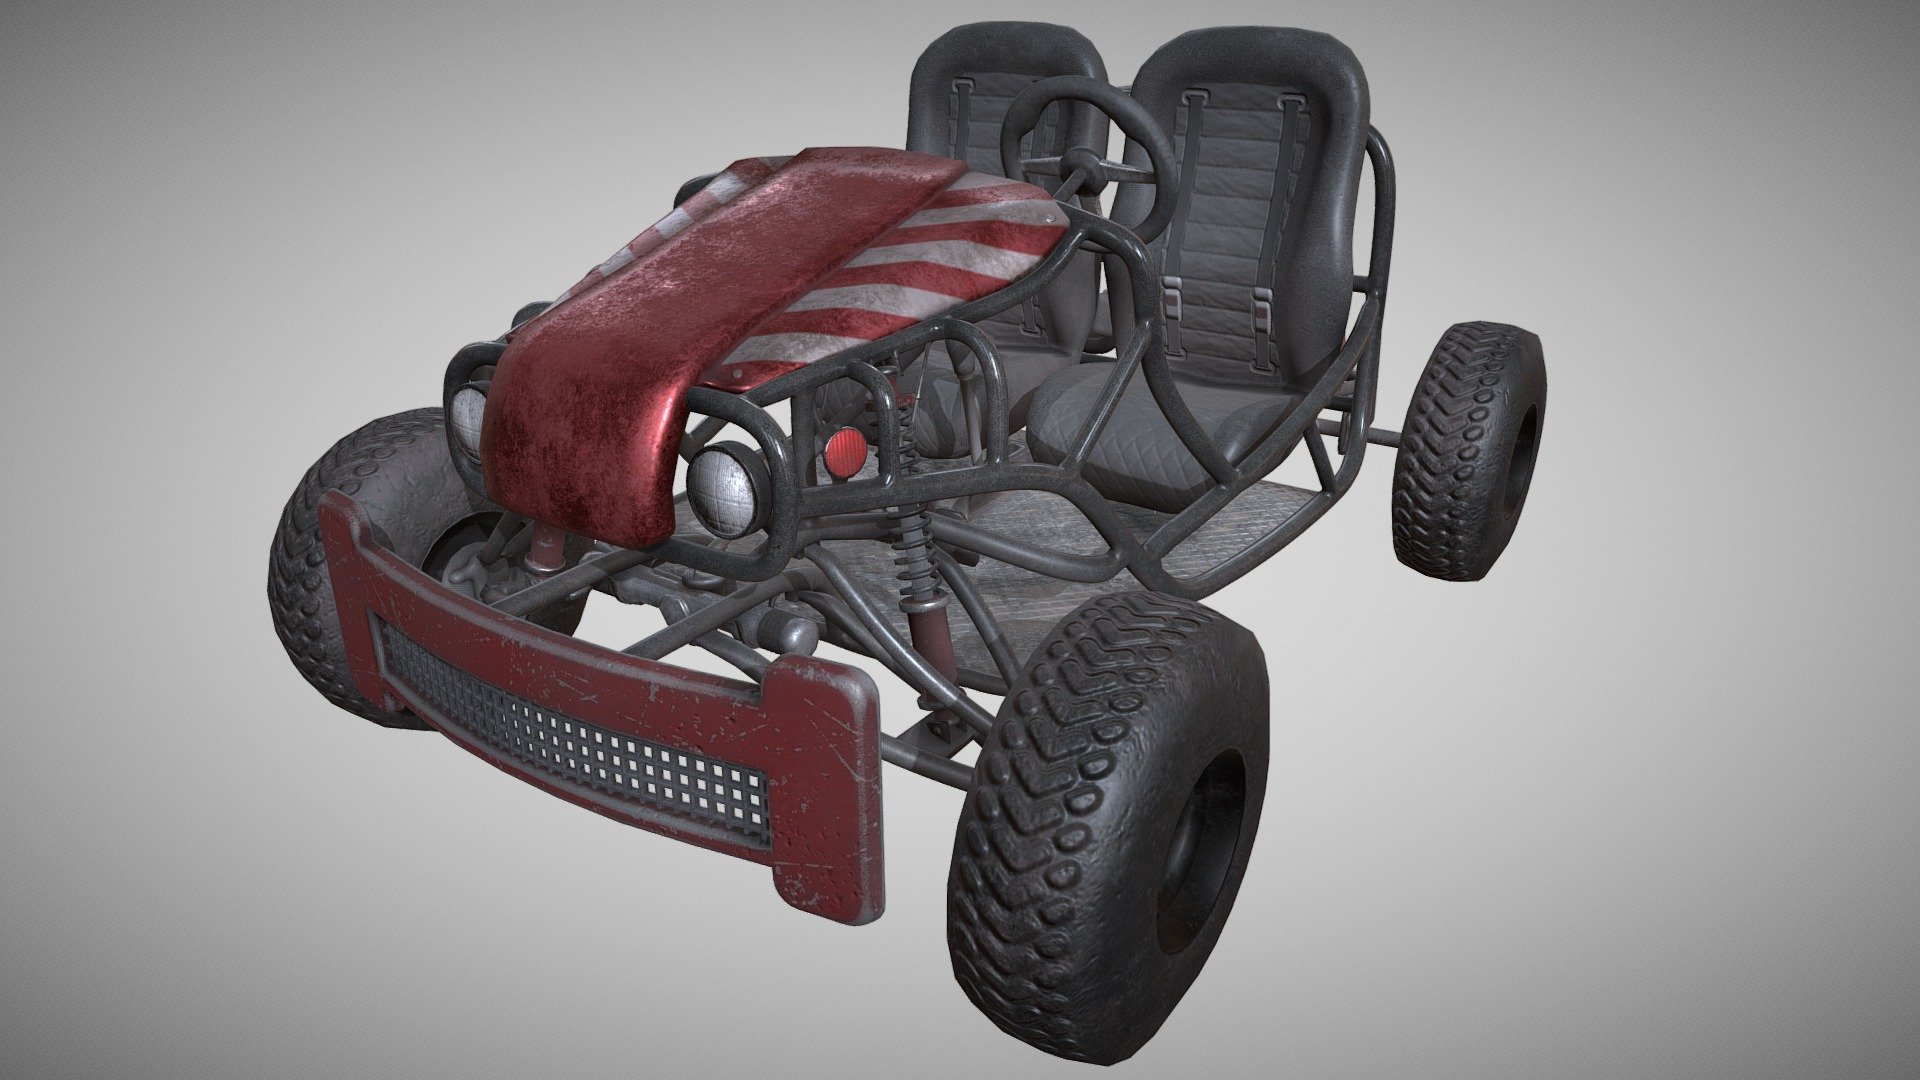 Kart de gasolina con barra antivuelco montada Modelo 3D $119 - .max - Free3D